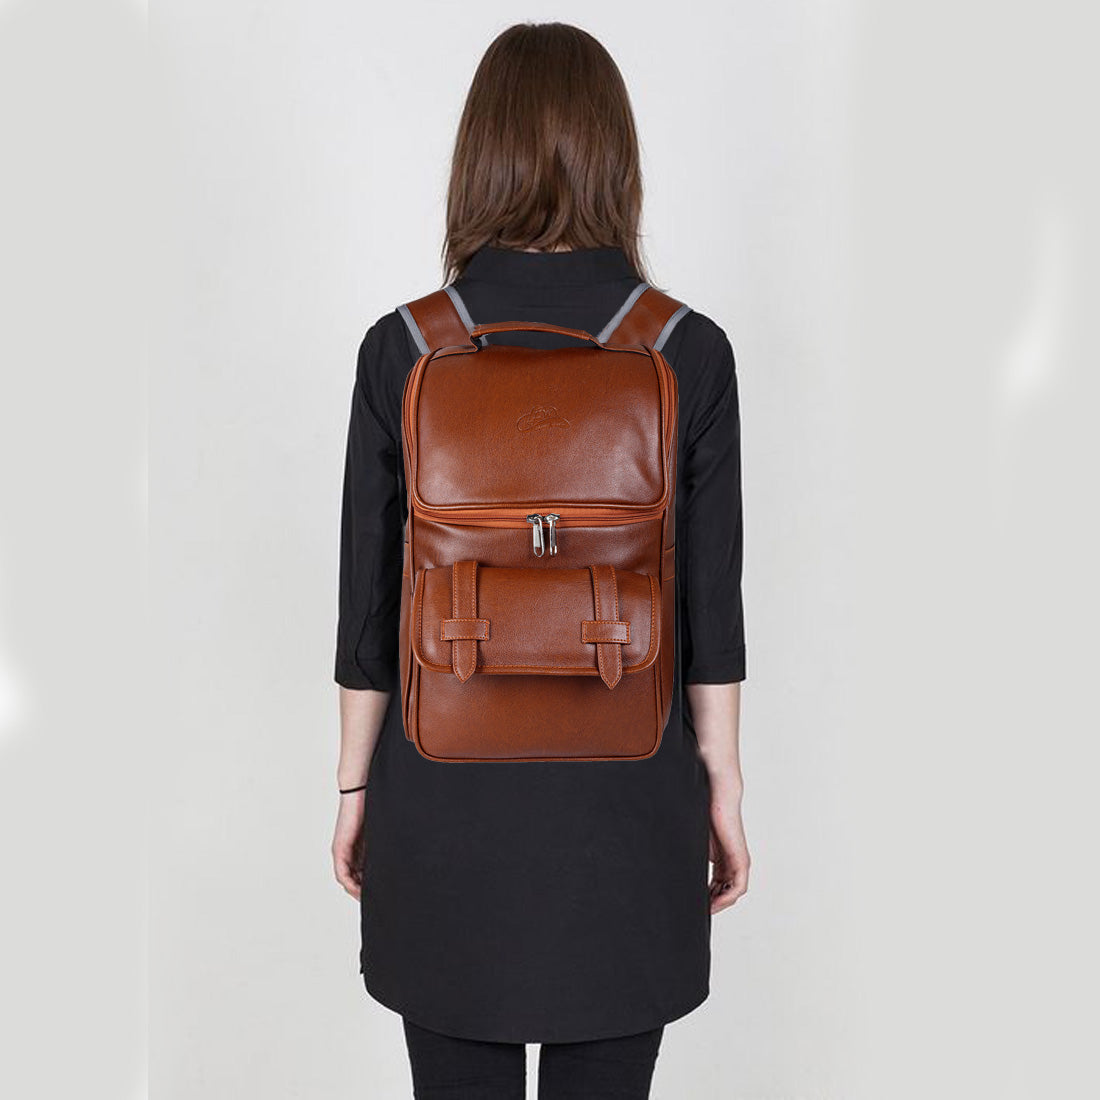 Leather World Premium Leatherette Unisex Backpack